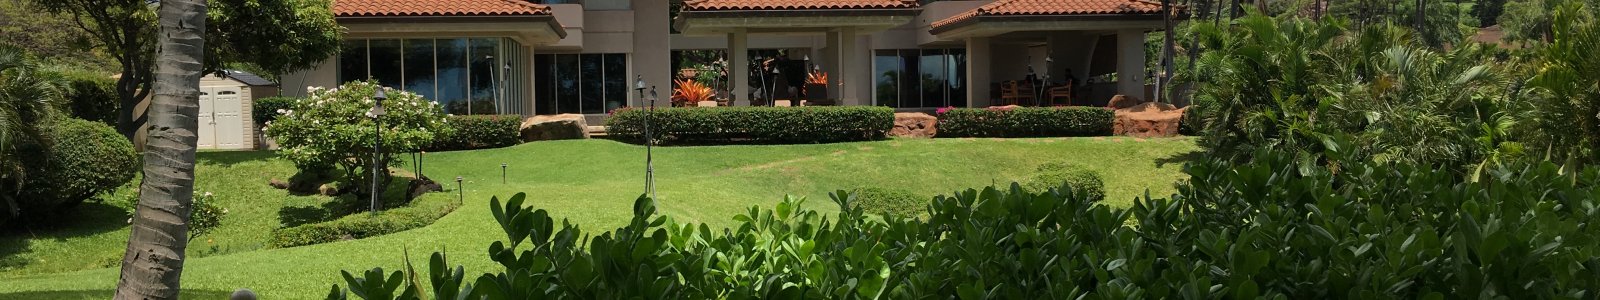 Black Rock Estate — The Most Elite Vacation Villa on Maui?